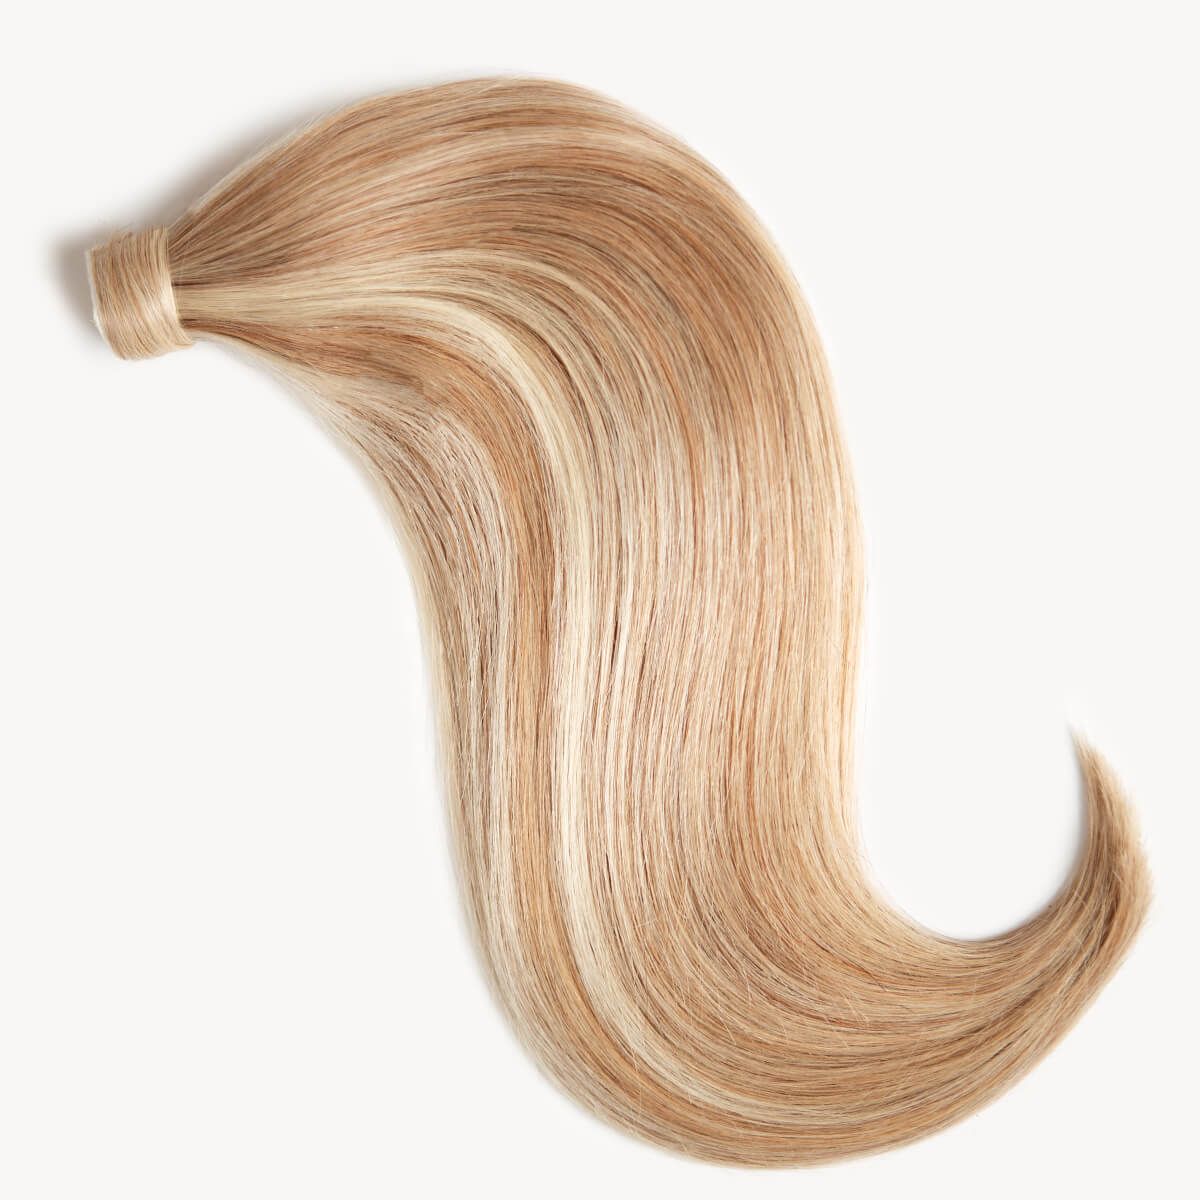 Ponytail Human Hair ExtensionsCurly Drawstring PonytailExtension real human  hair Long 20Inch Wave Clip in Hair Extensions Ponytail Hairpiece for Black  Women 1B20 inch469 OZ  Walmartcom